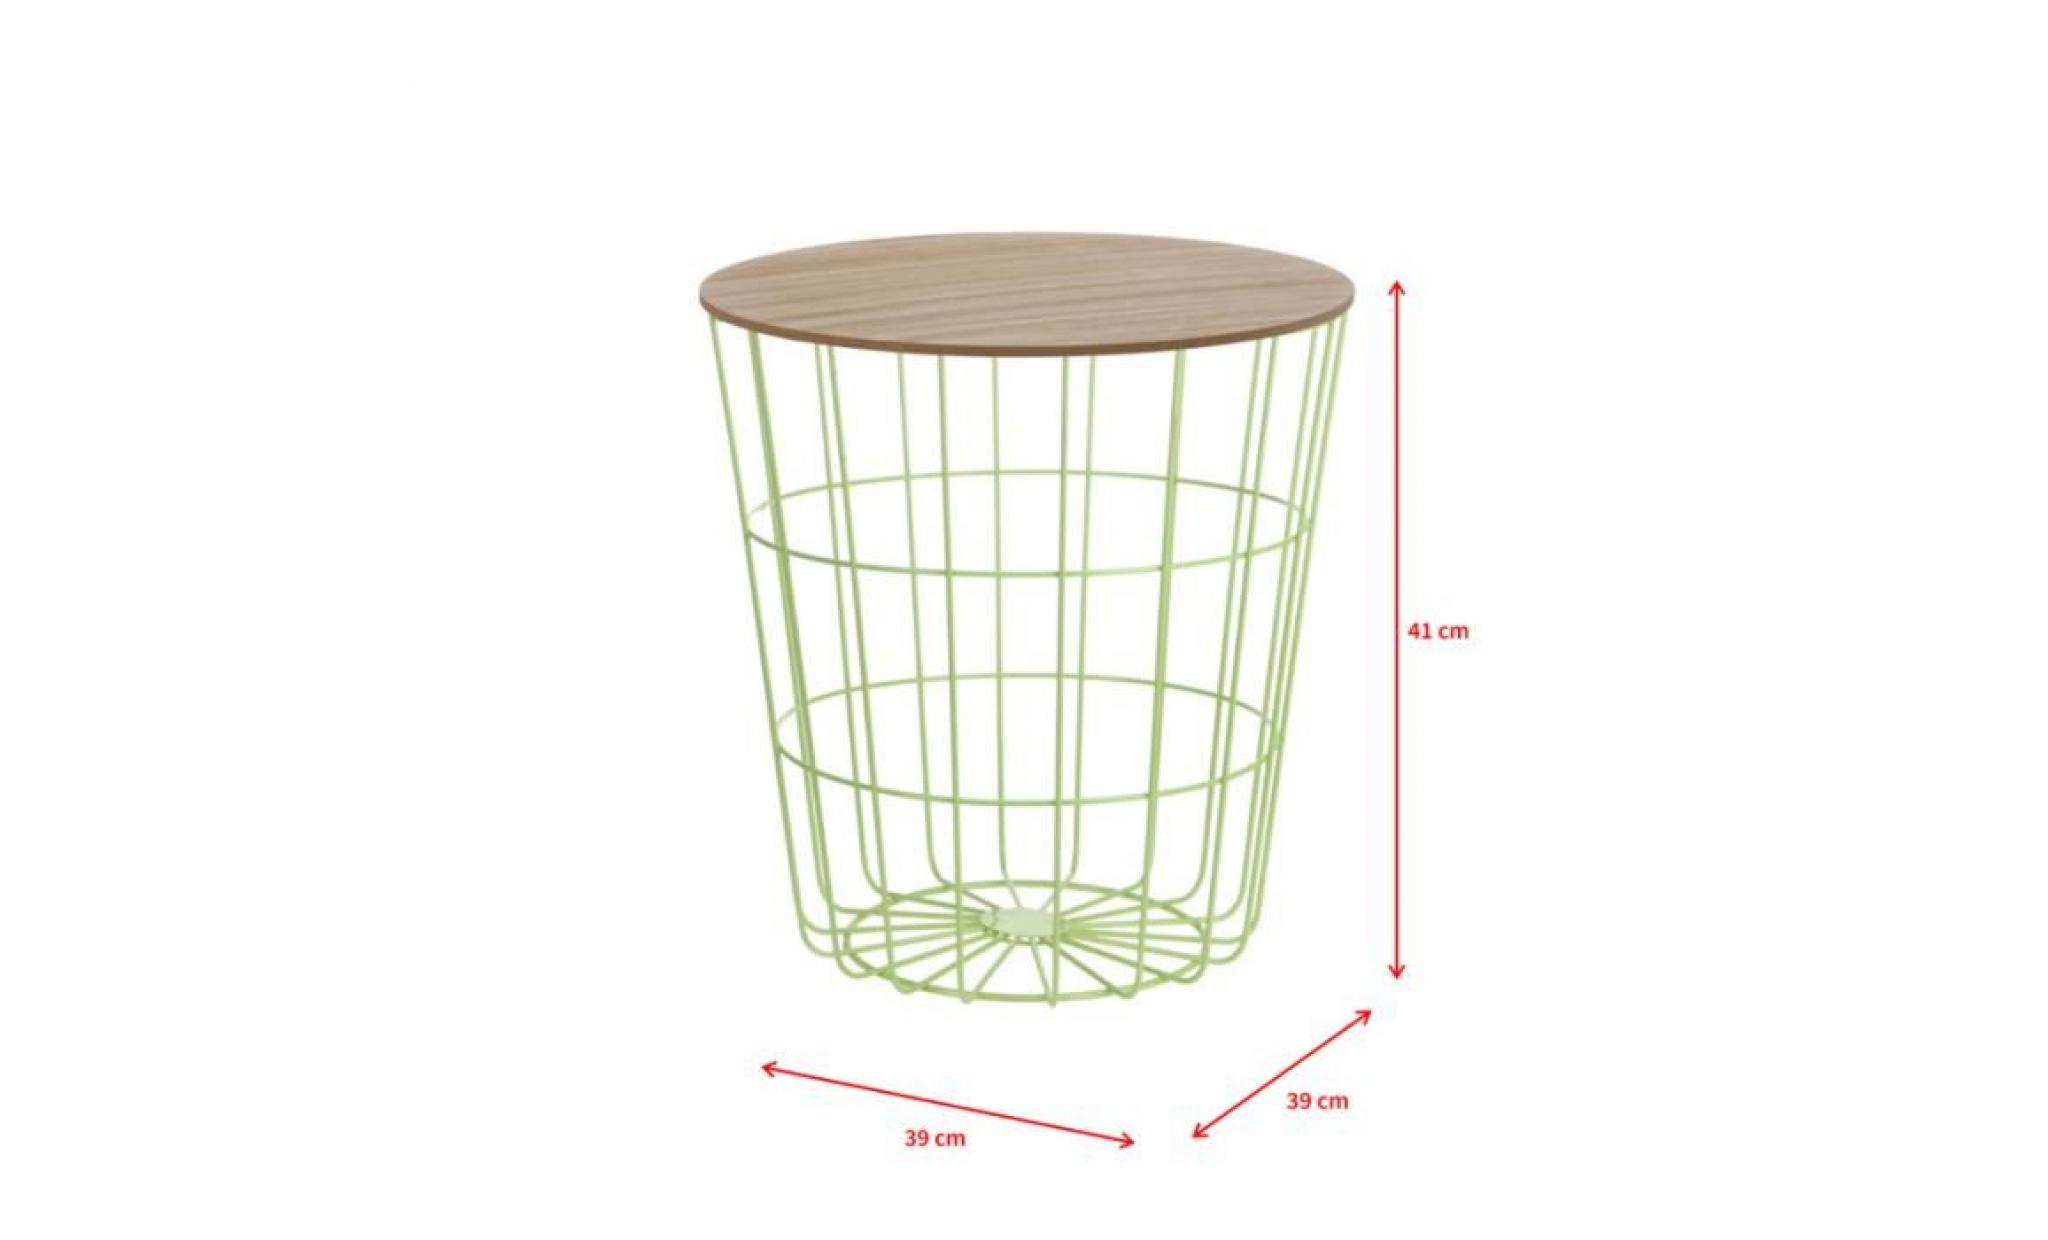 table basse / table d’appoint   suny   41 cm   vert   panier fonctionnel   style scandinave pas cher